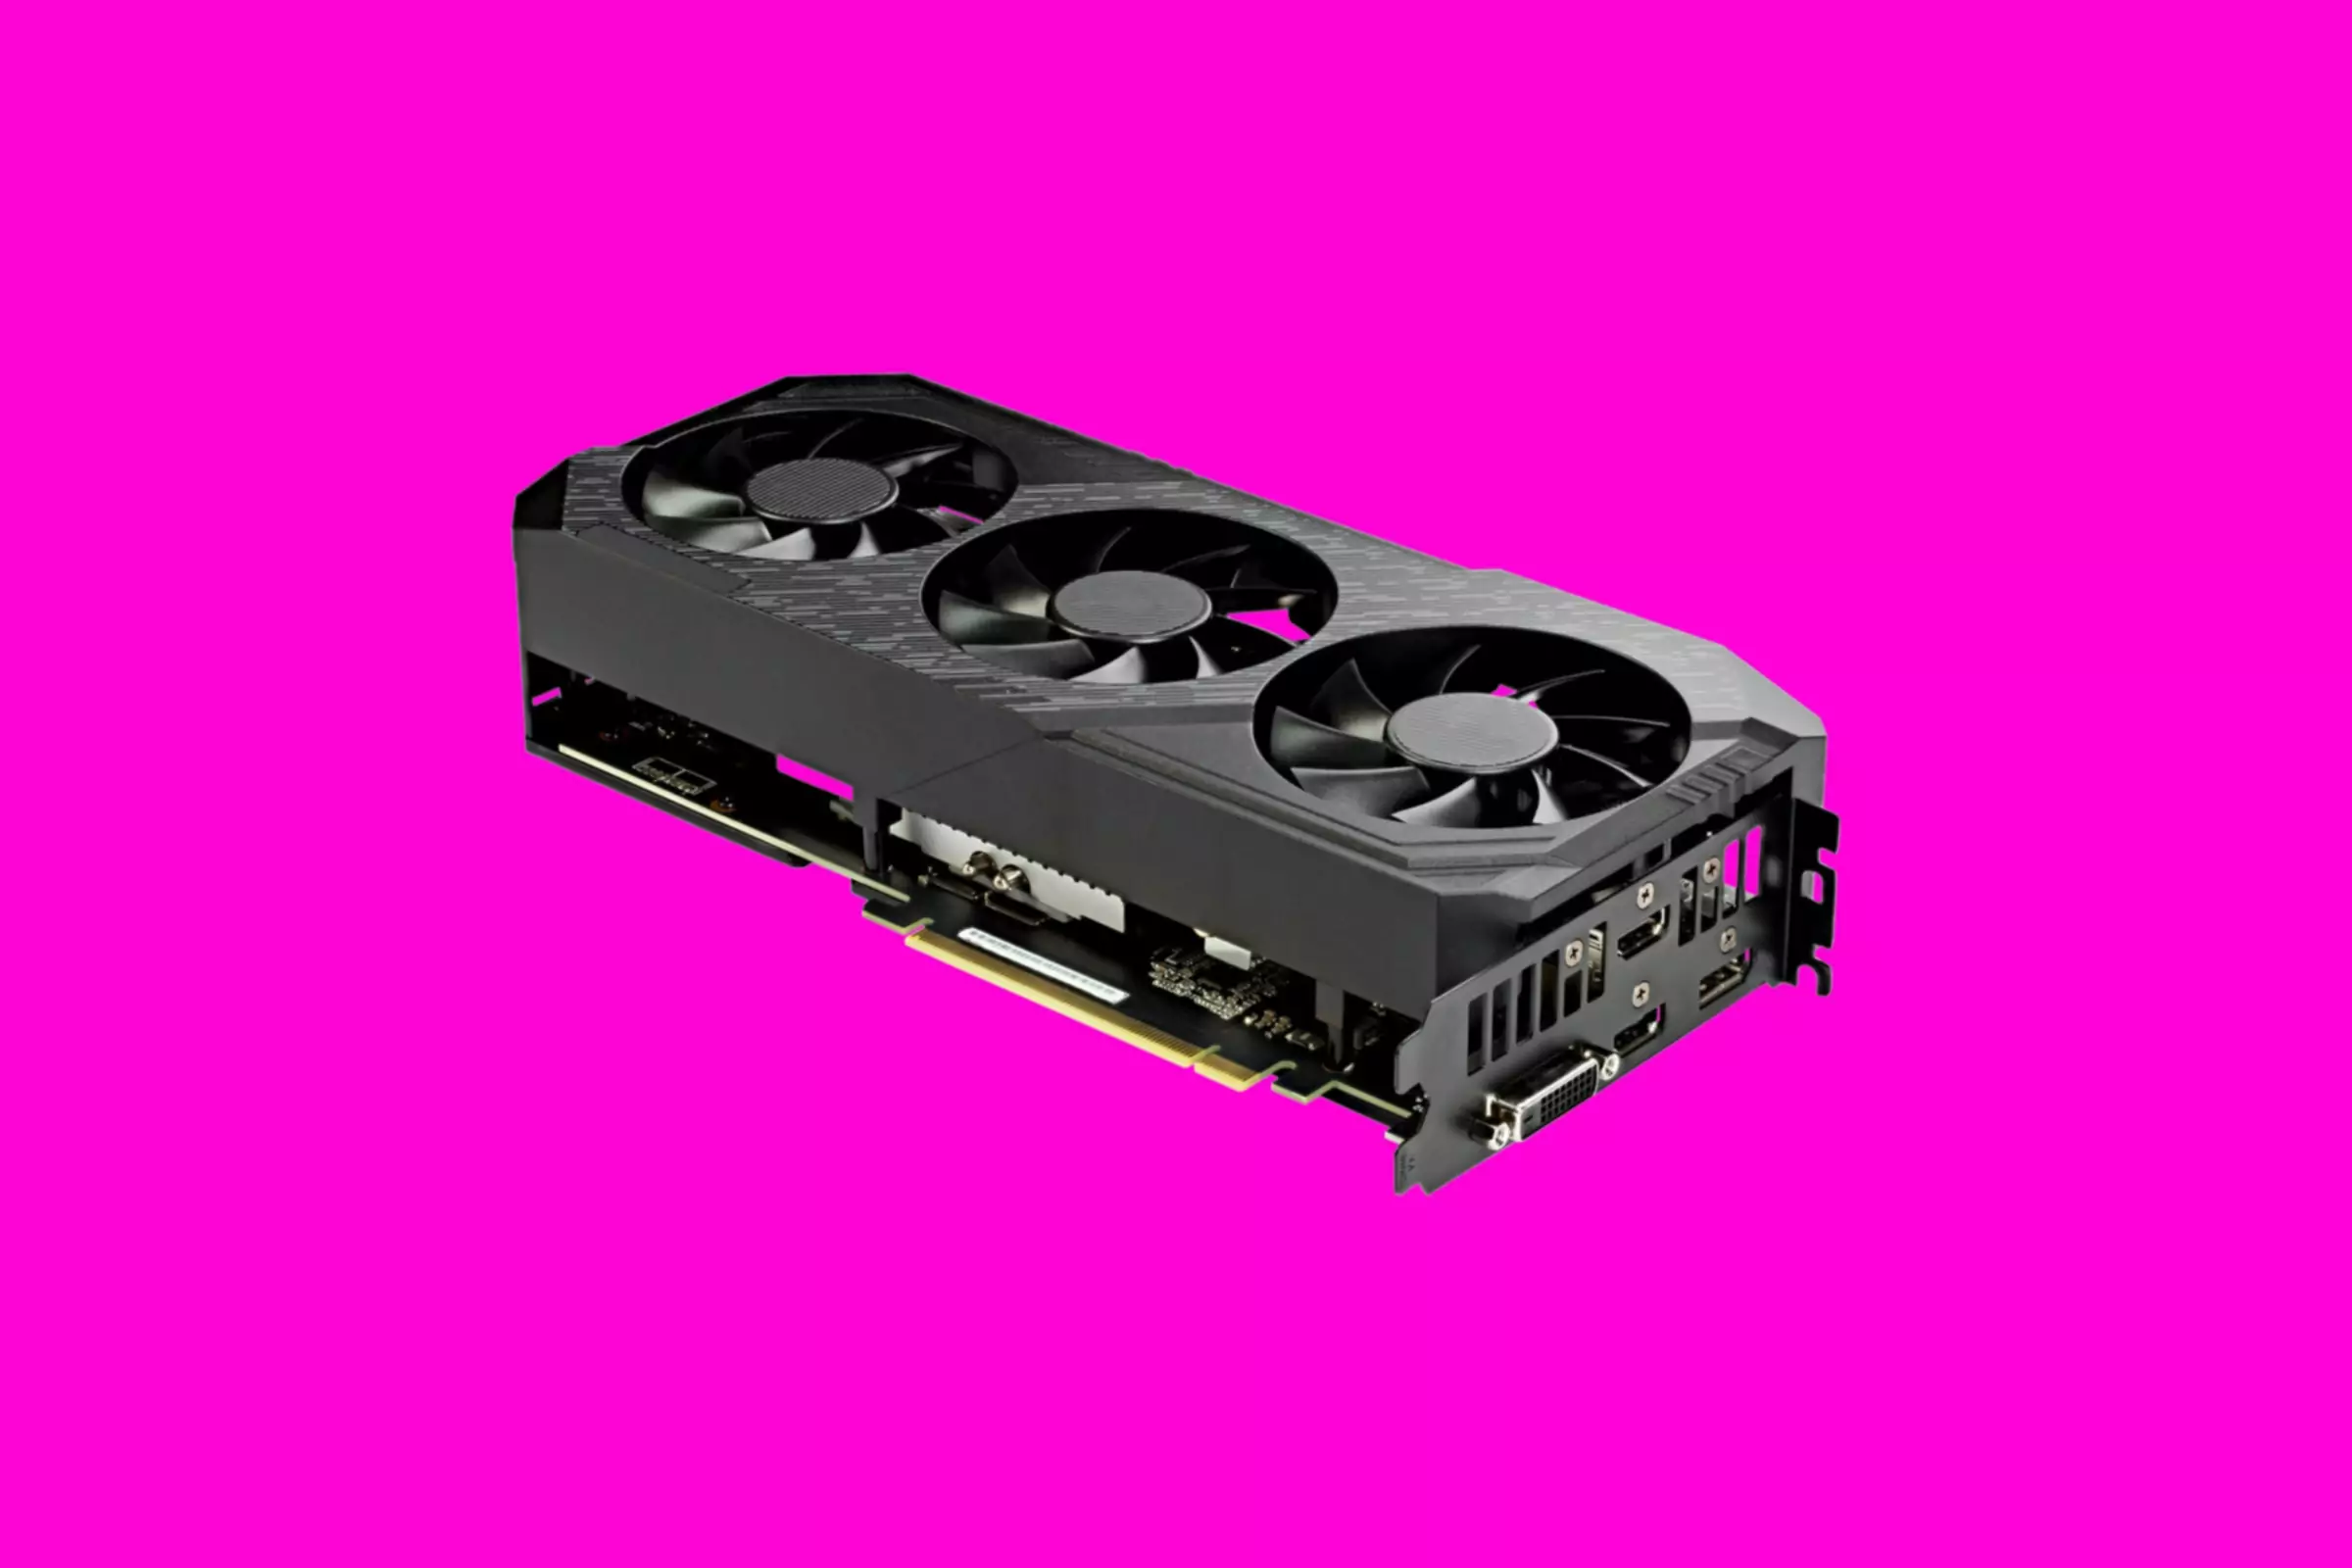 Nepopsaný GPU na růžovém pozadí